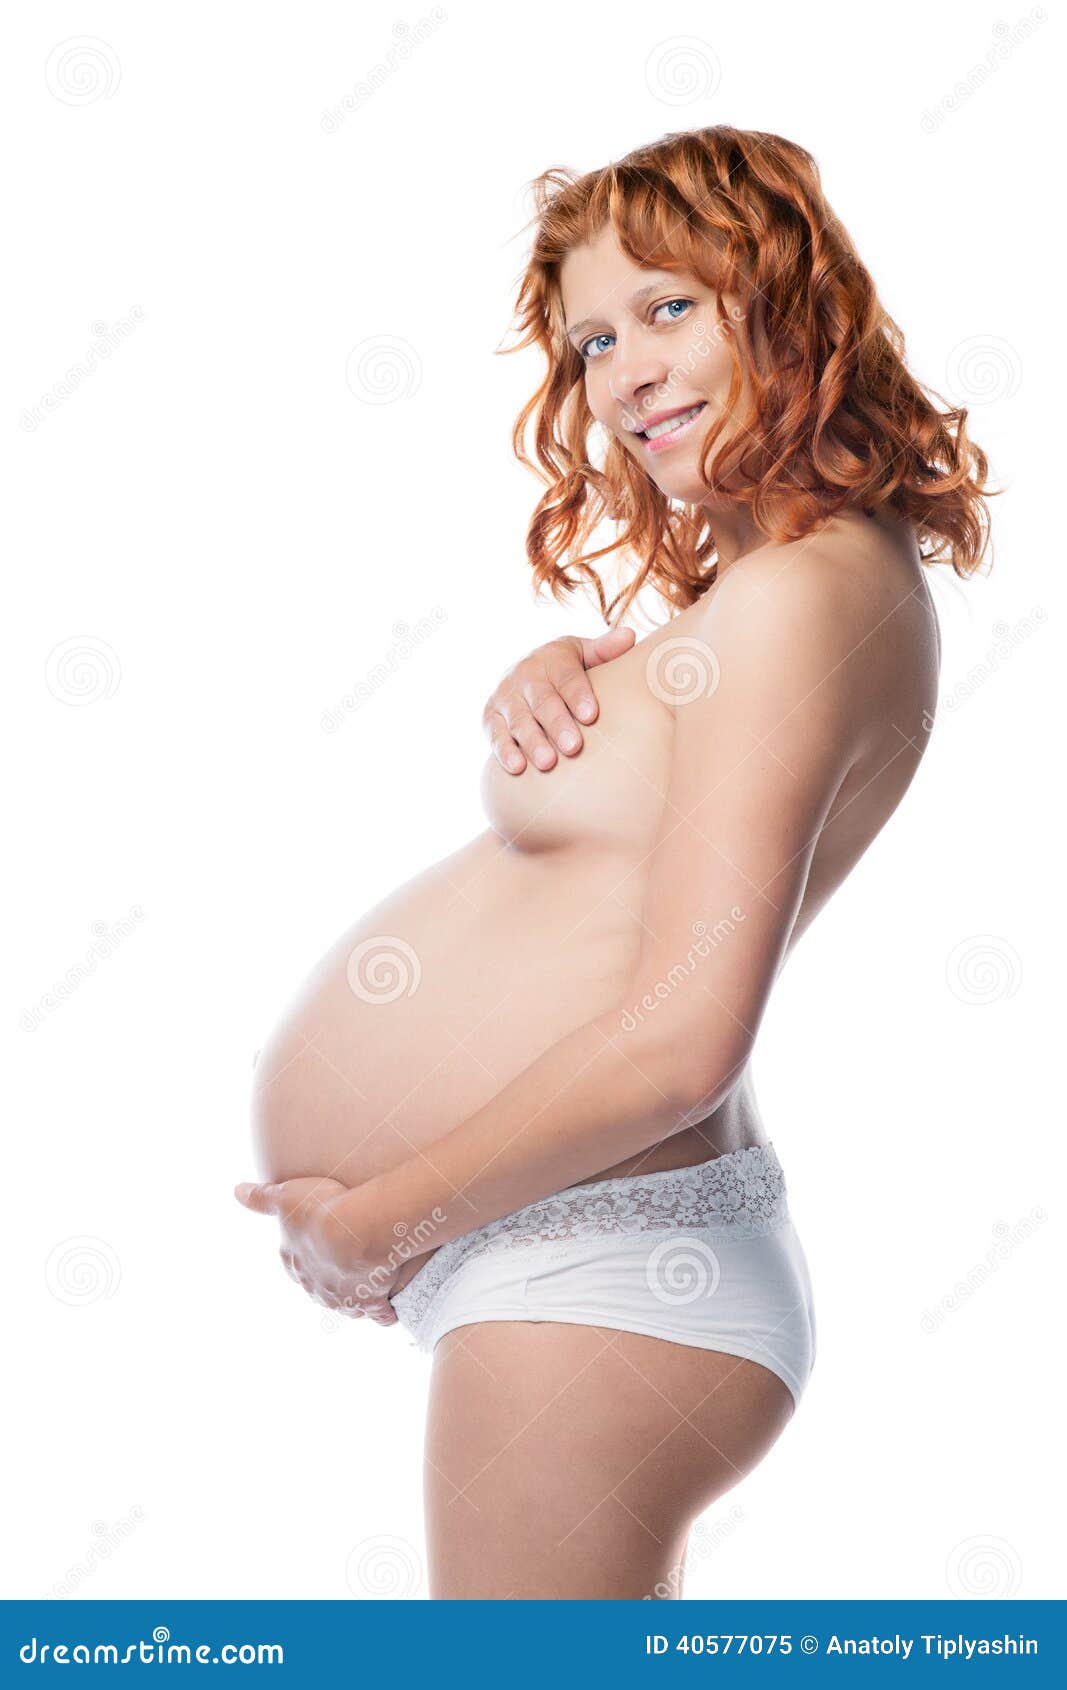 nude pregnant women pics